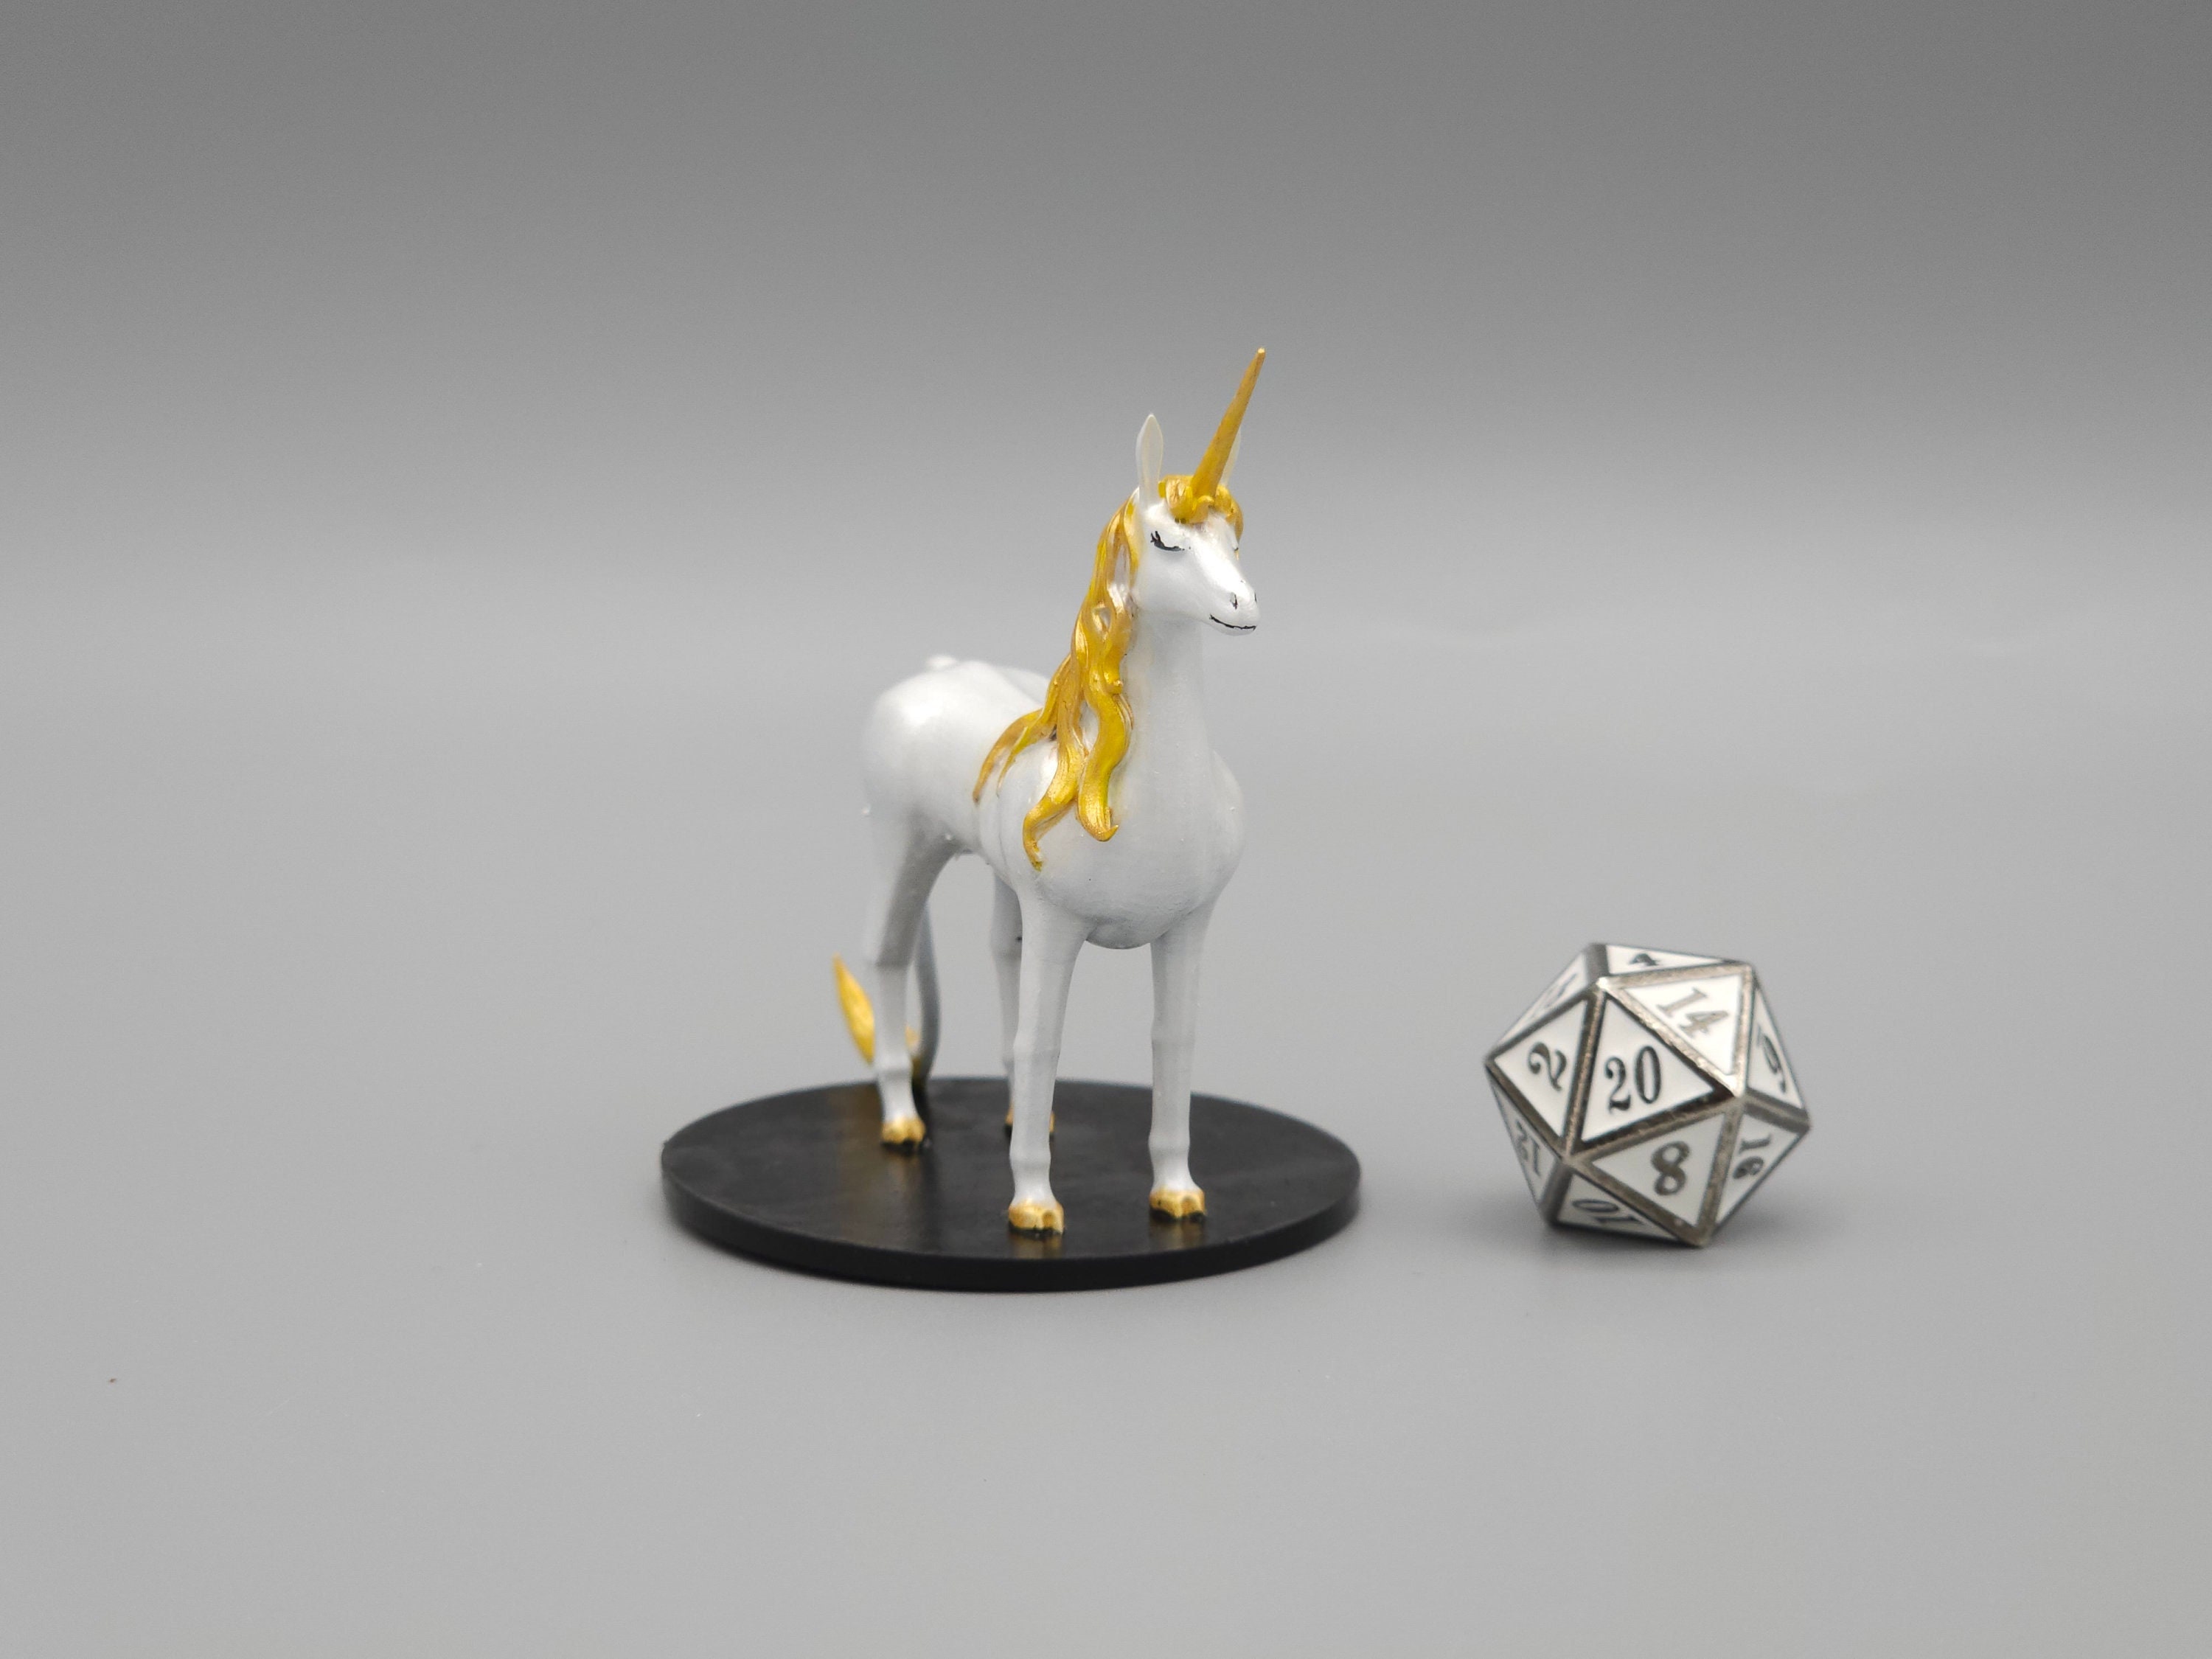 DIY Unicorn Paint Kit / Unique Gift / Unicorn Art / Kids Birthday Present  Creative Exploration, Mini Art Studio FREE Shipping 